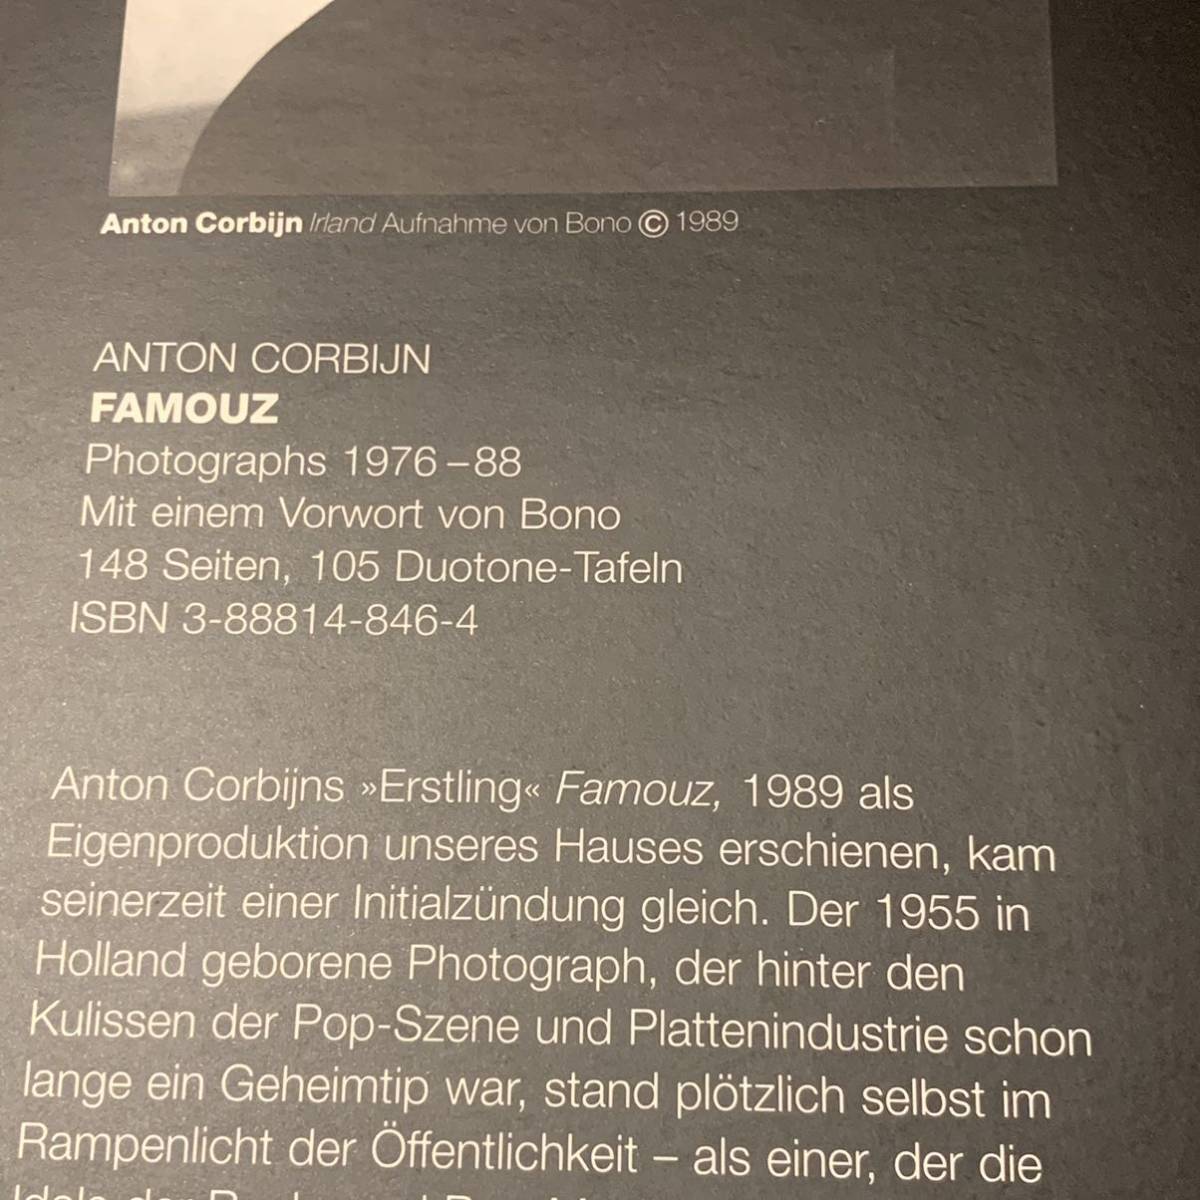 ANTON CORBIJN famouz photographs 1975-88 写真集アントン・コービン　U2デヴィッドボウイビョークニルヴァーナレッチリ_画像7